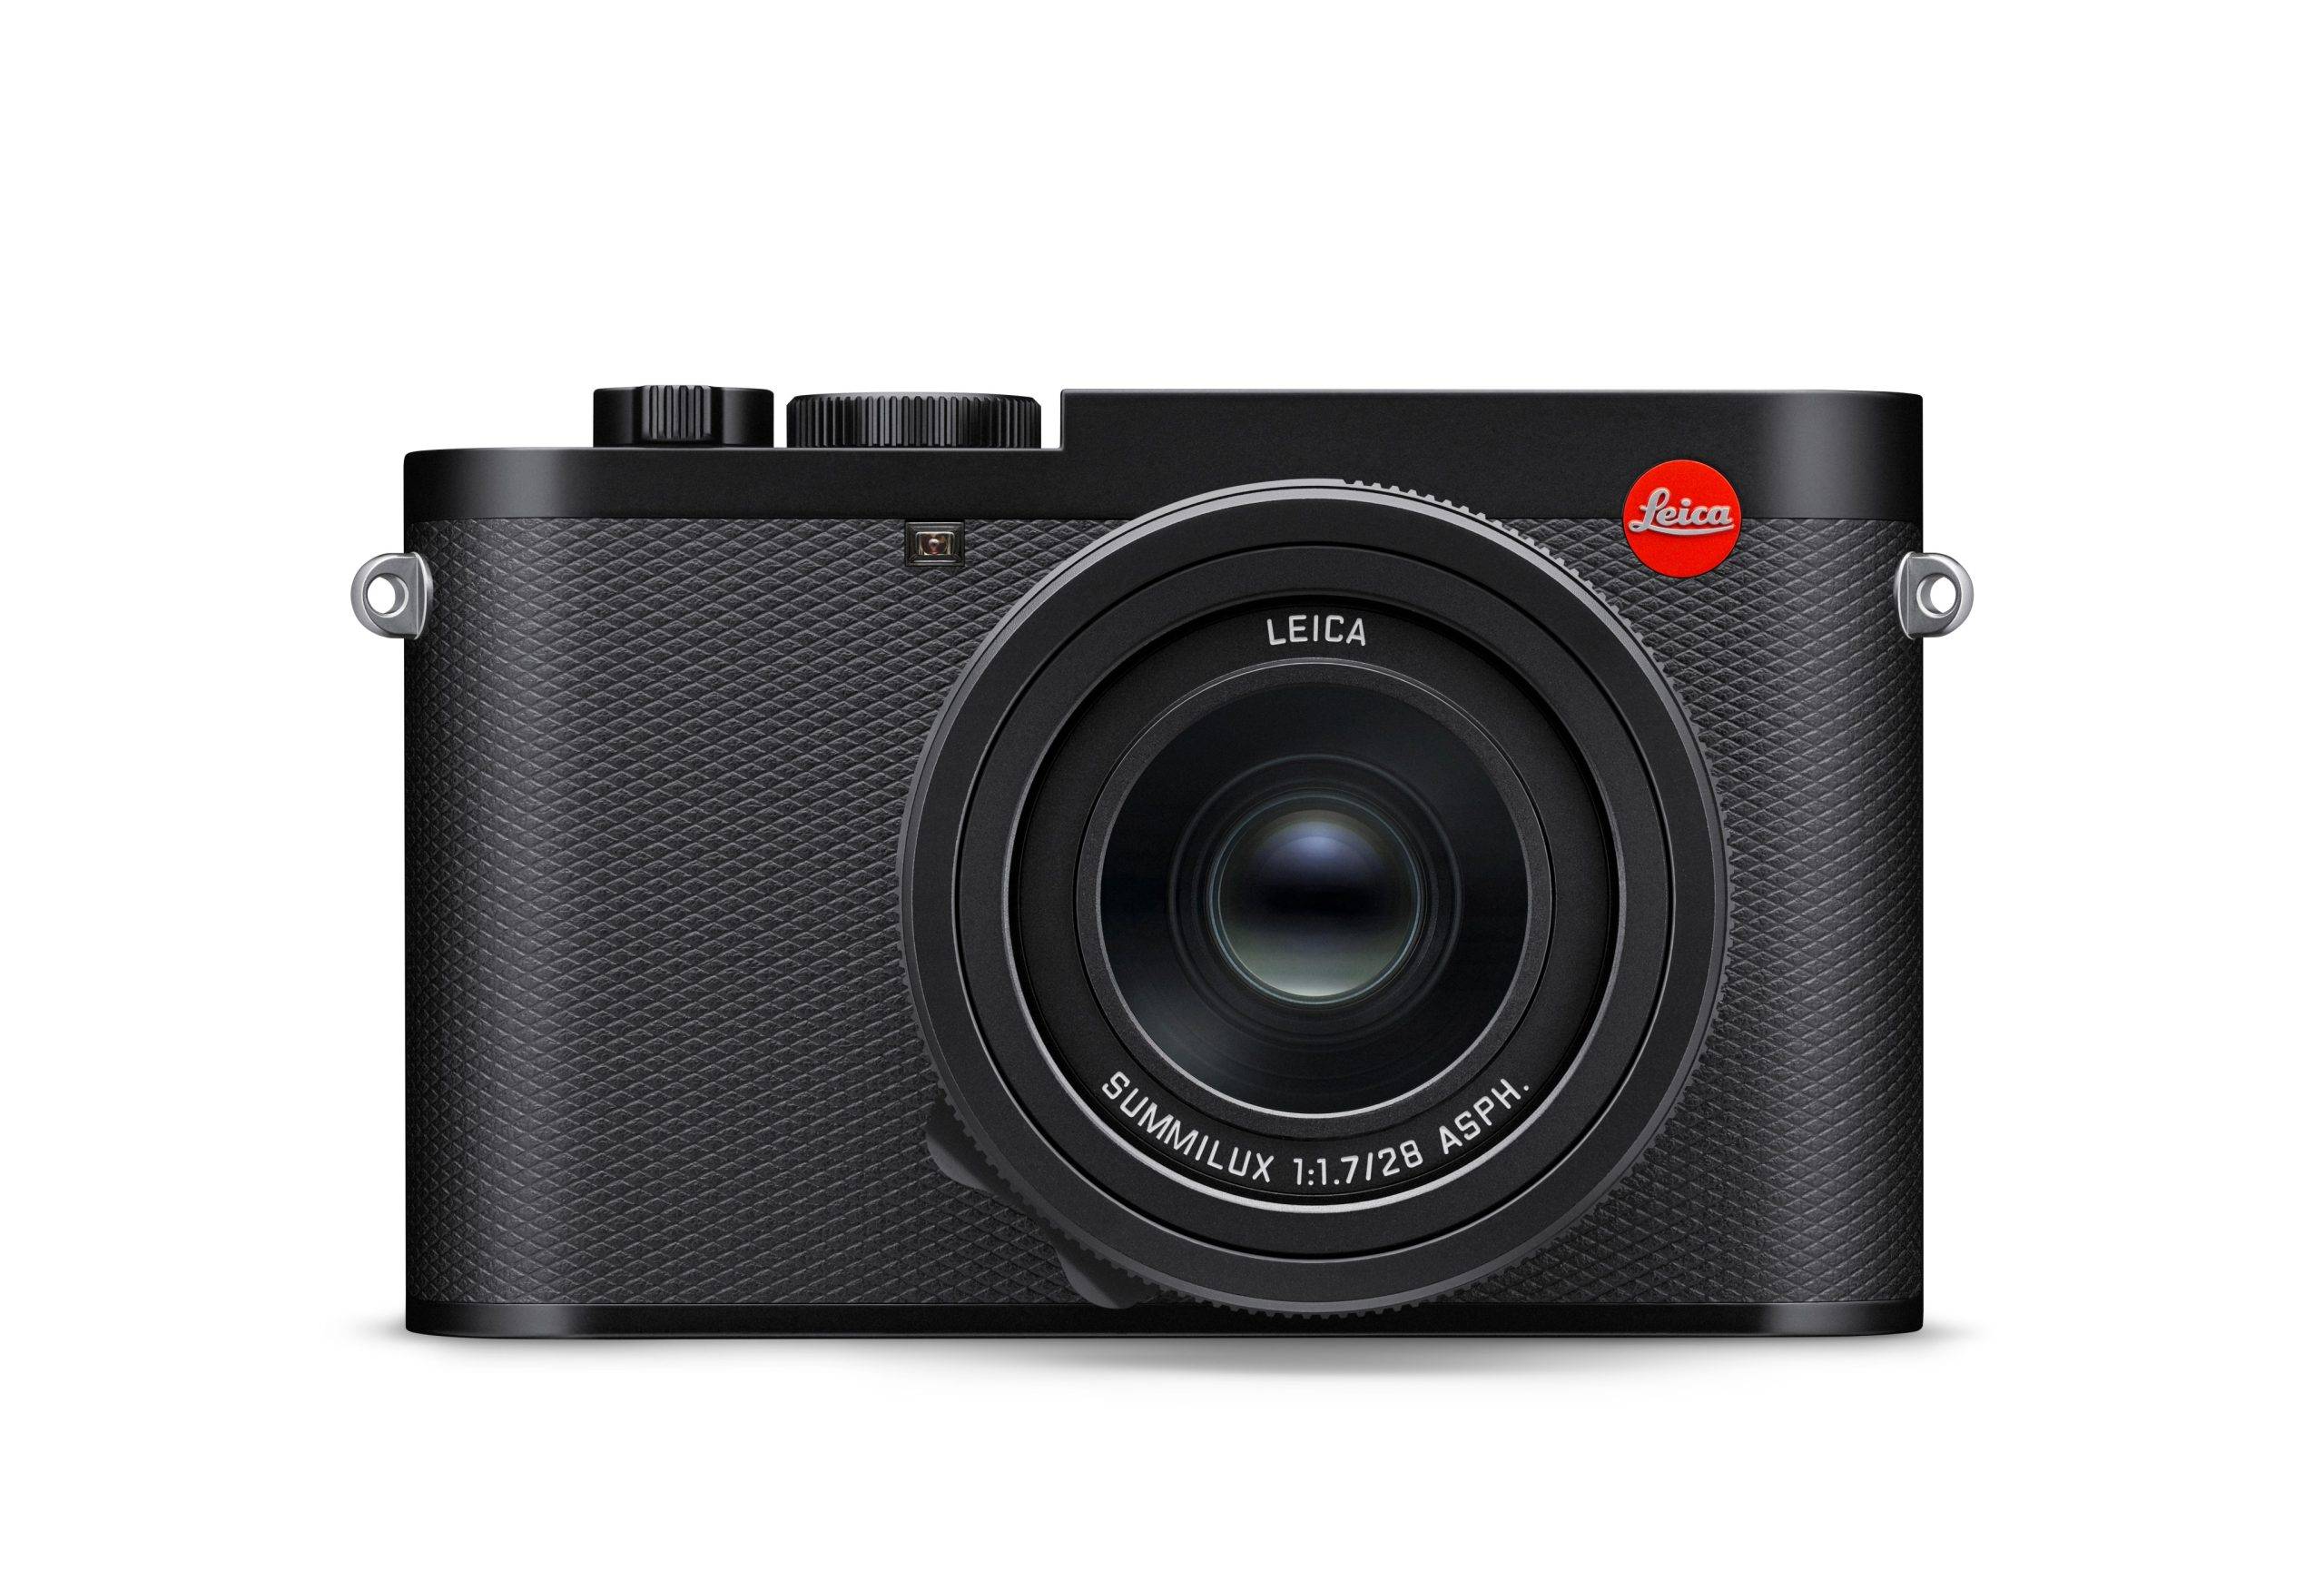 Leica Kameras – Perfekte Optik